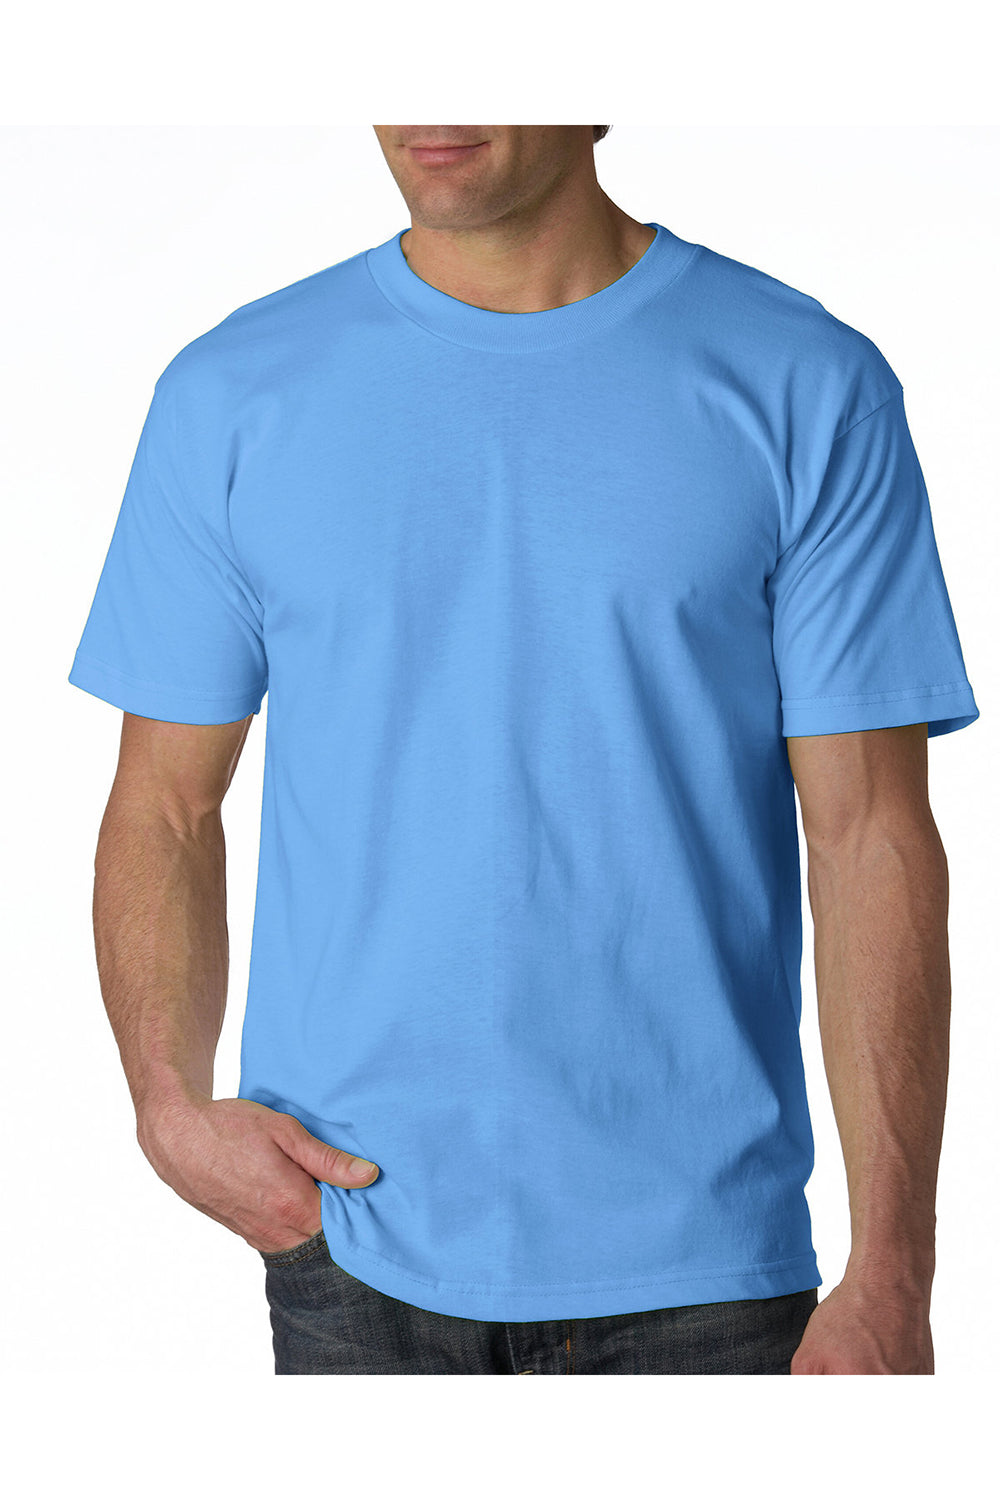 Bayside BA2905 Mens USA Made Short Sleeve Crewneck T-Shirt Carolina Blue Model Front